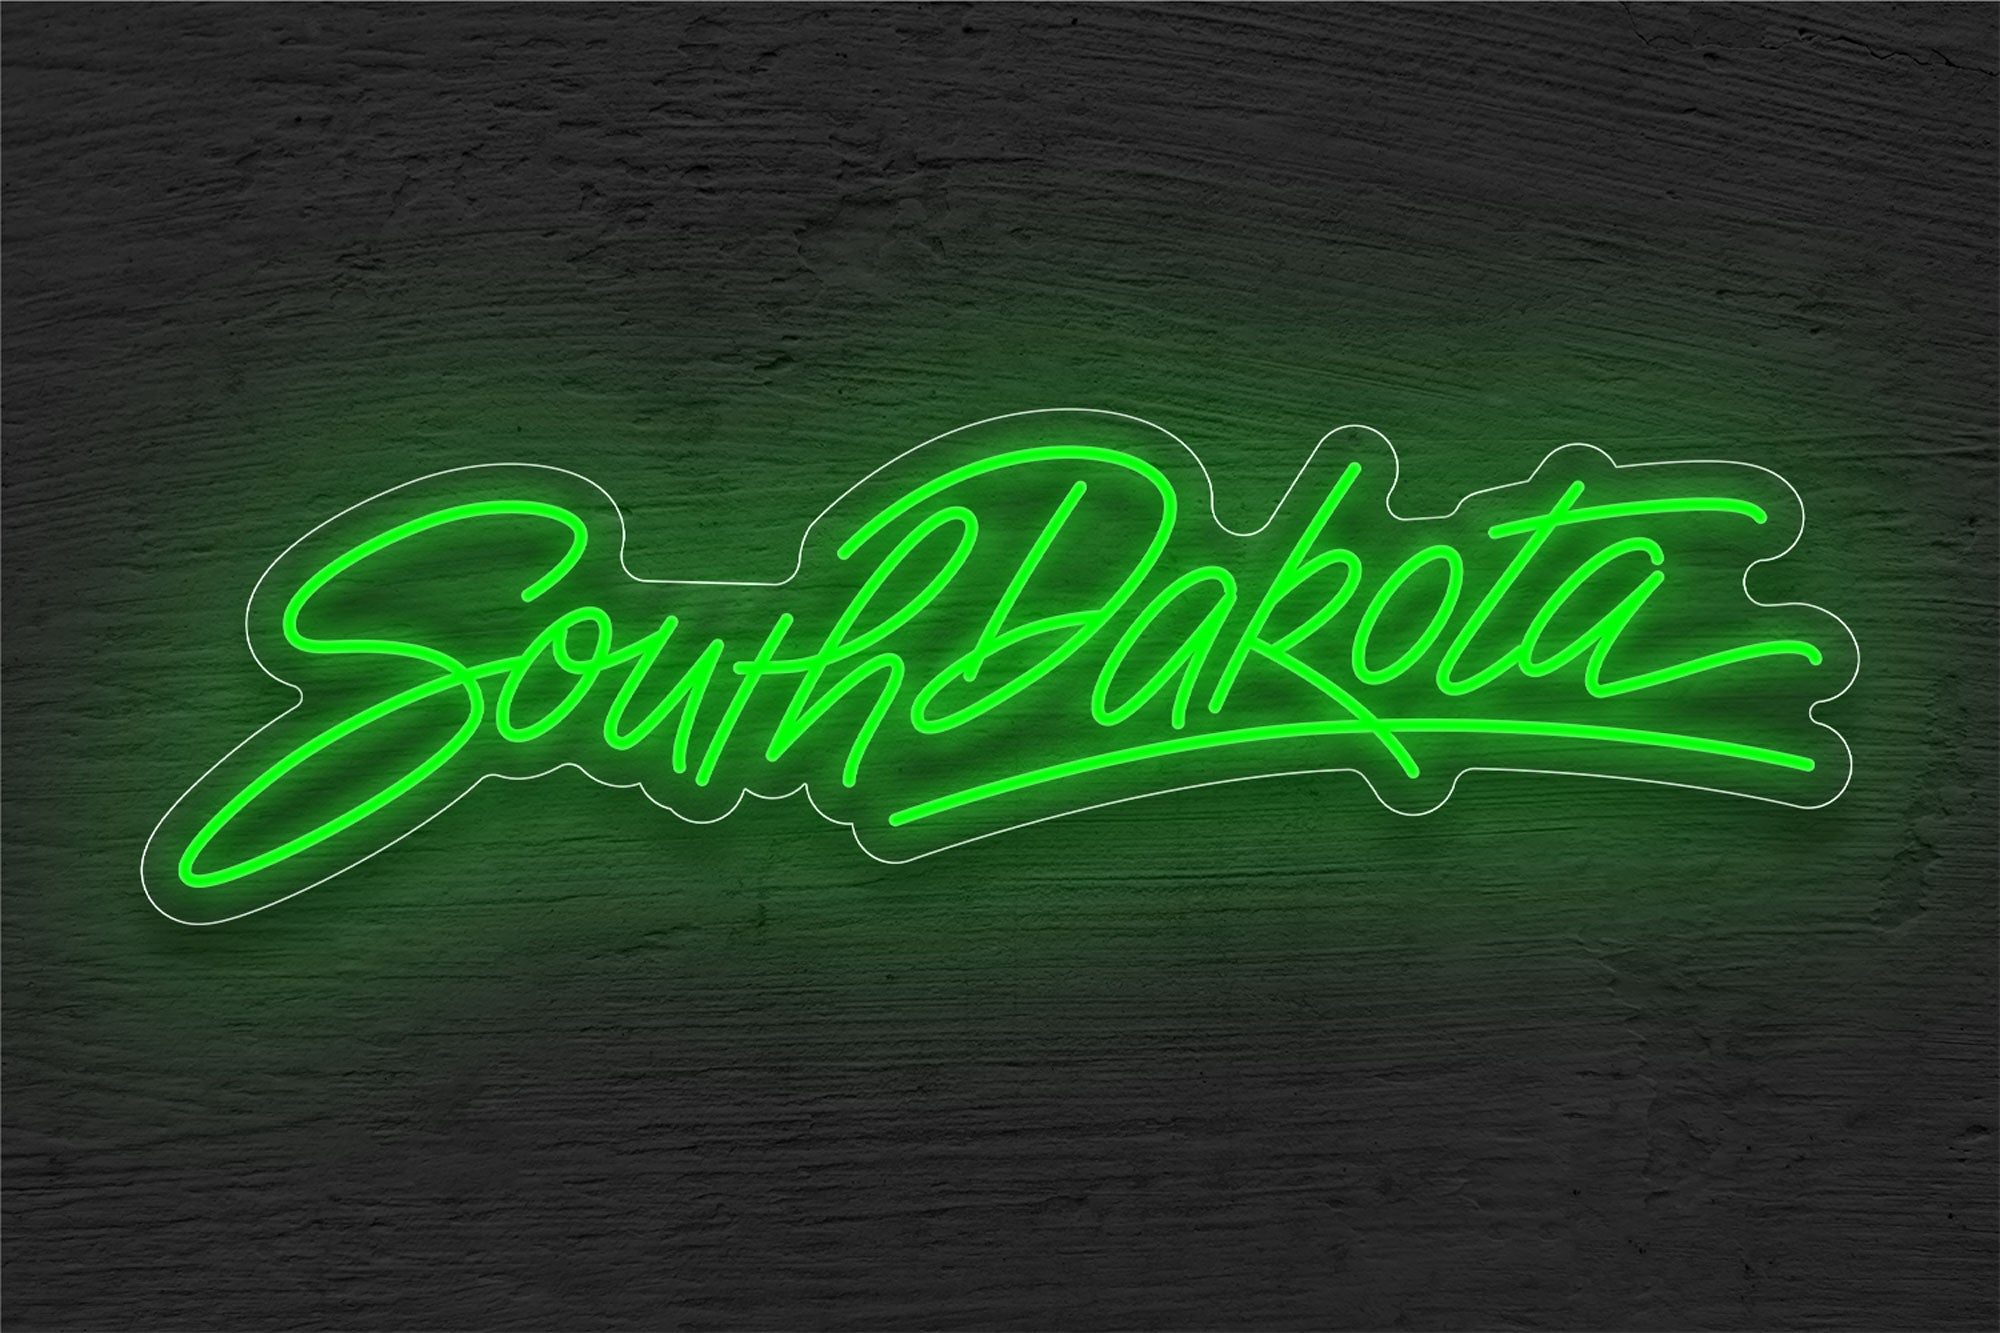 South Dakota LED Neon Sign